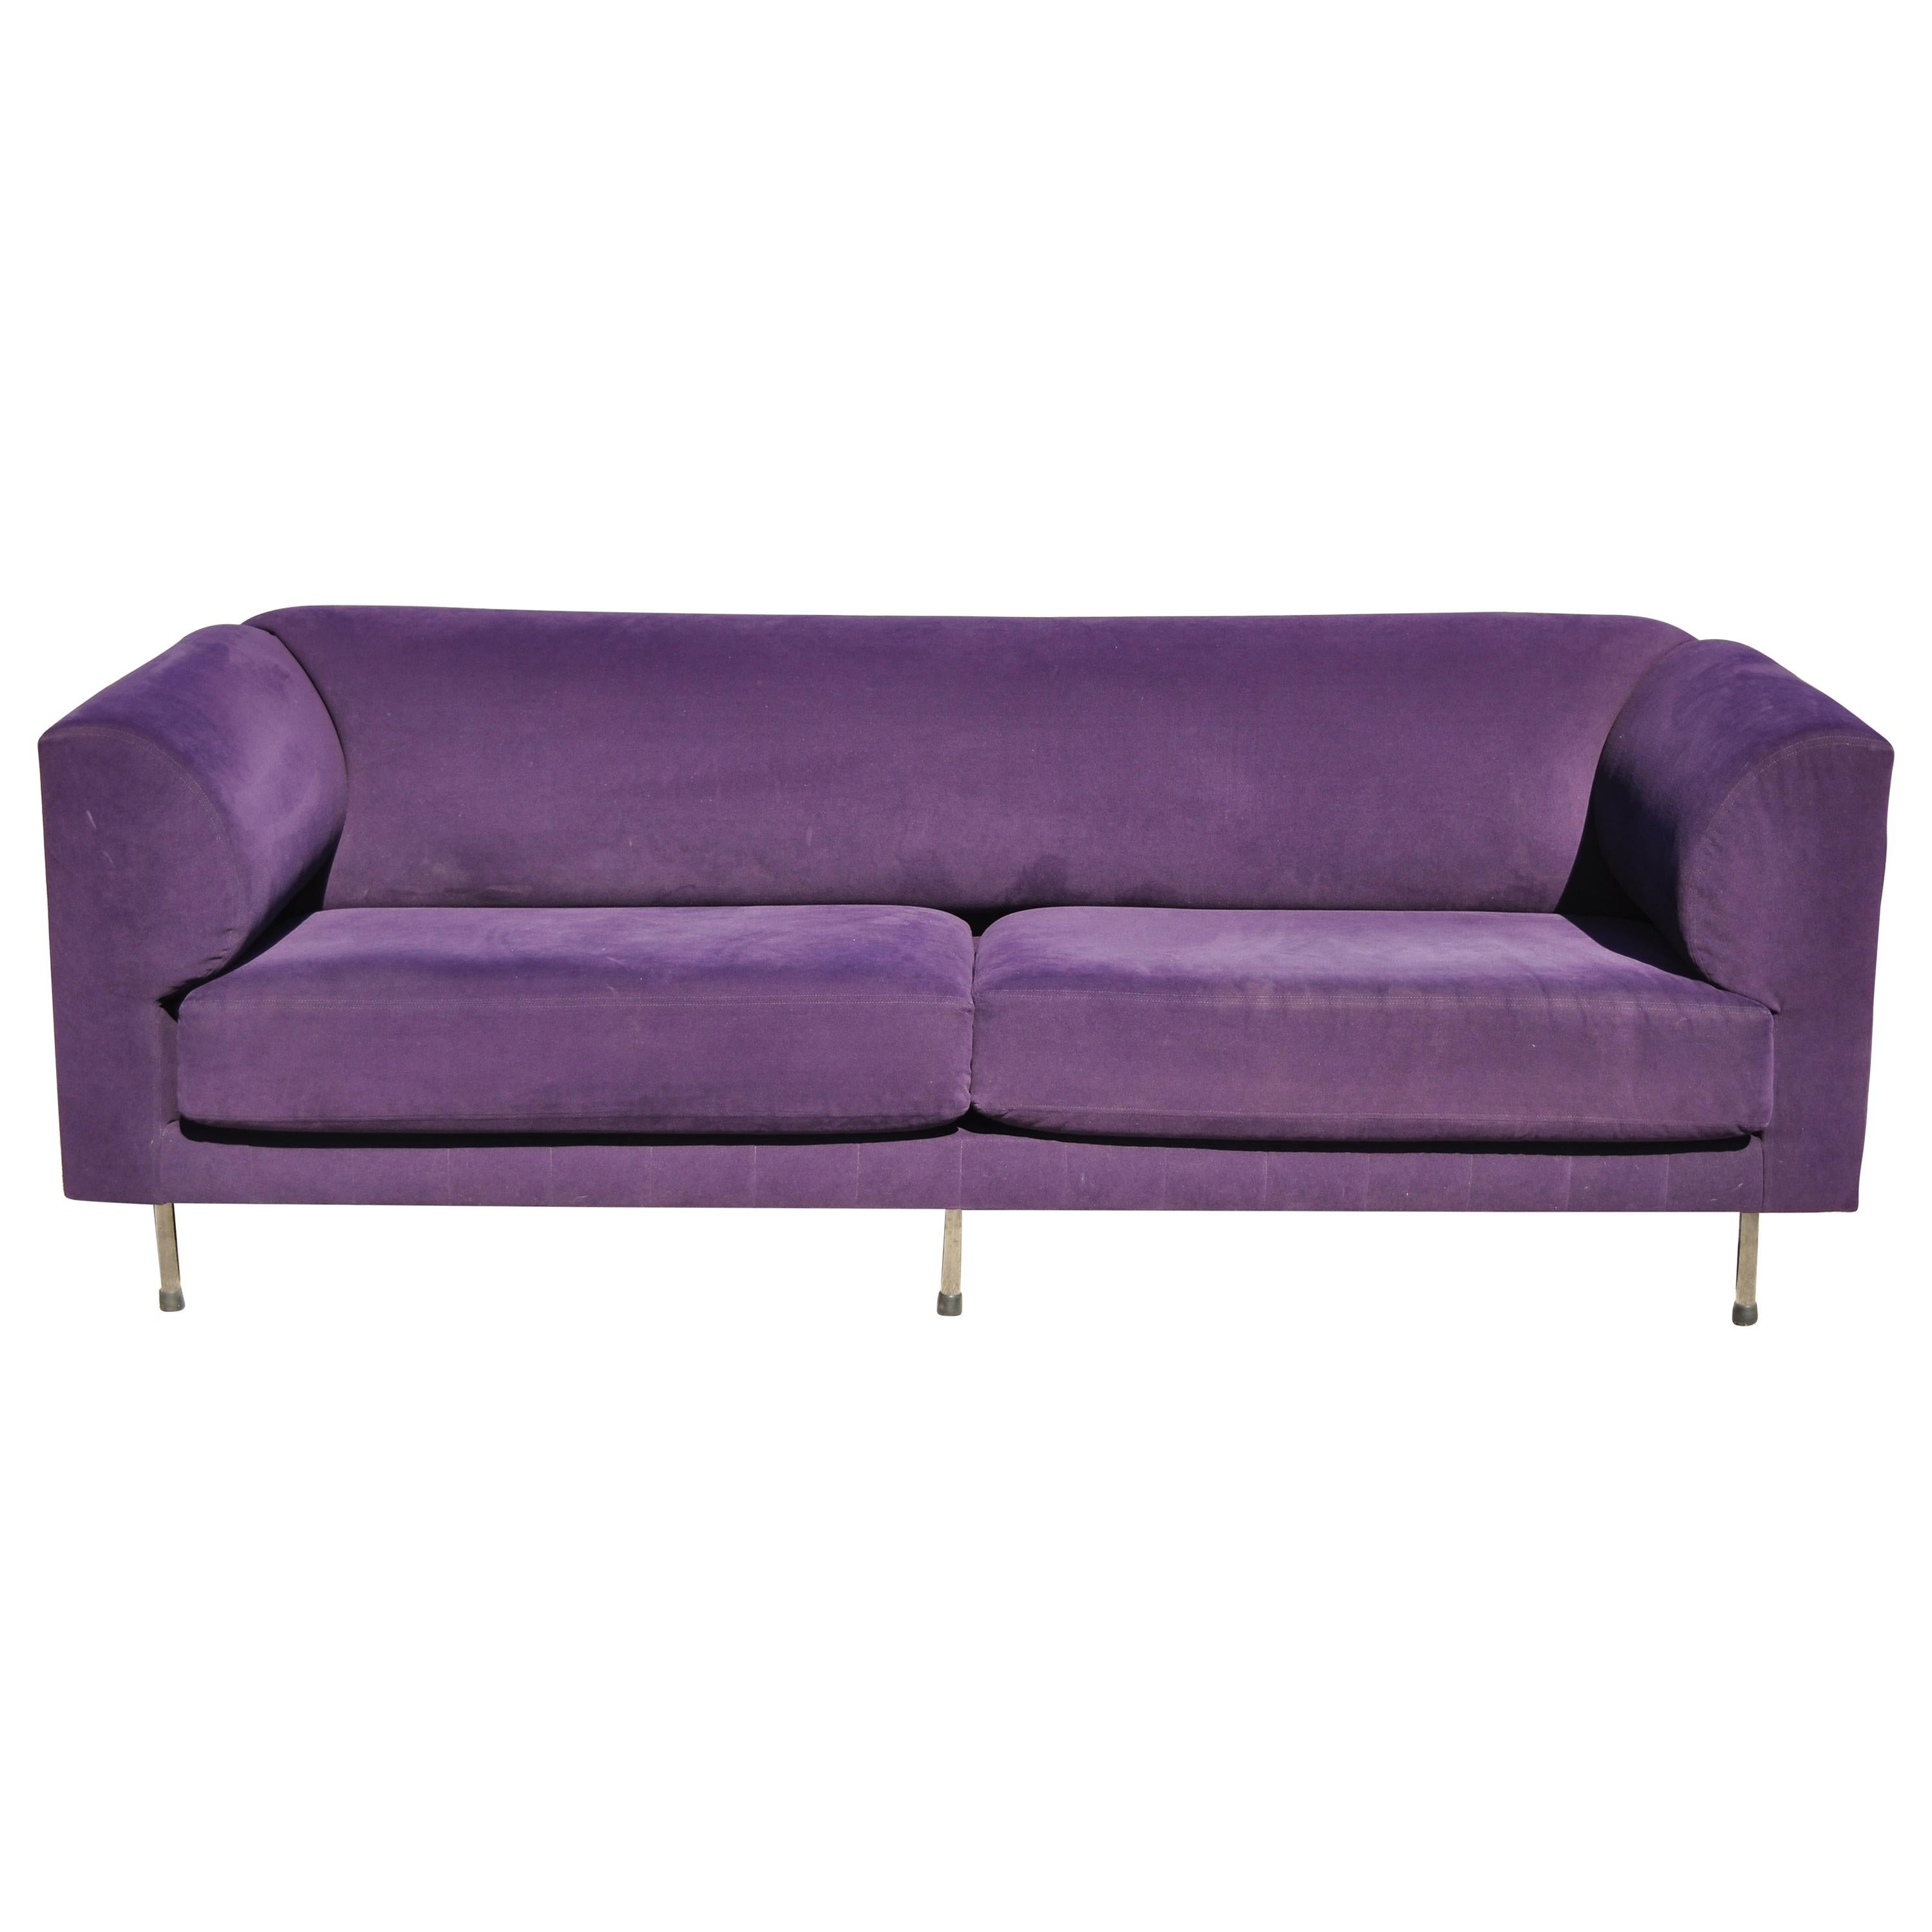 Larry Laslo for Directional Purple Modern Italian Bauhaus Style Chrome Leg Sofa For Sale